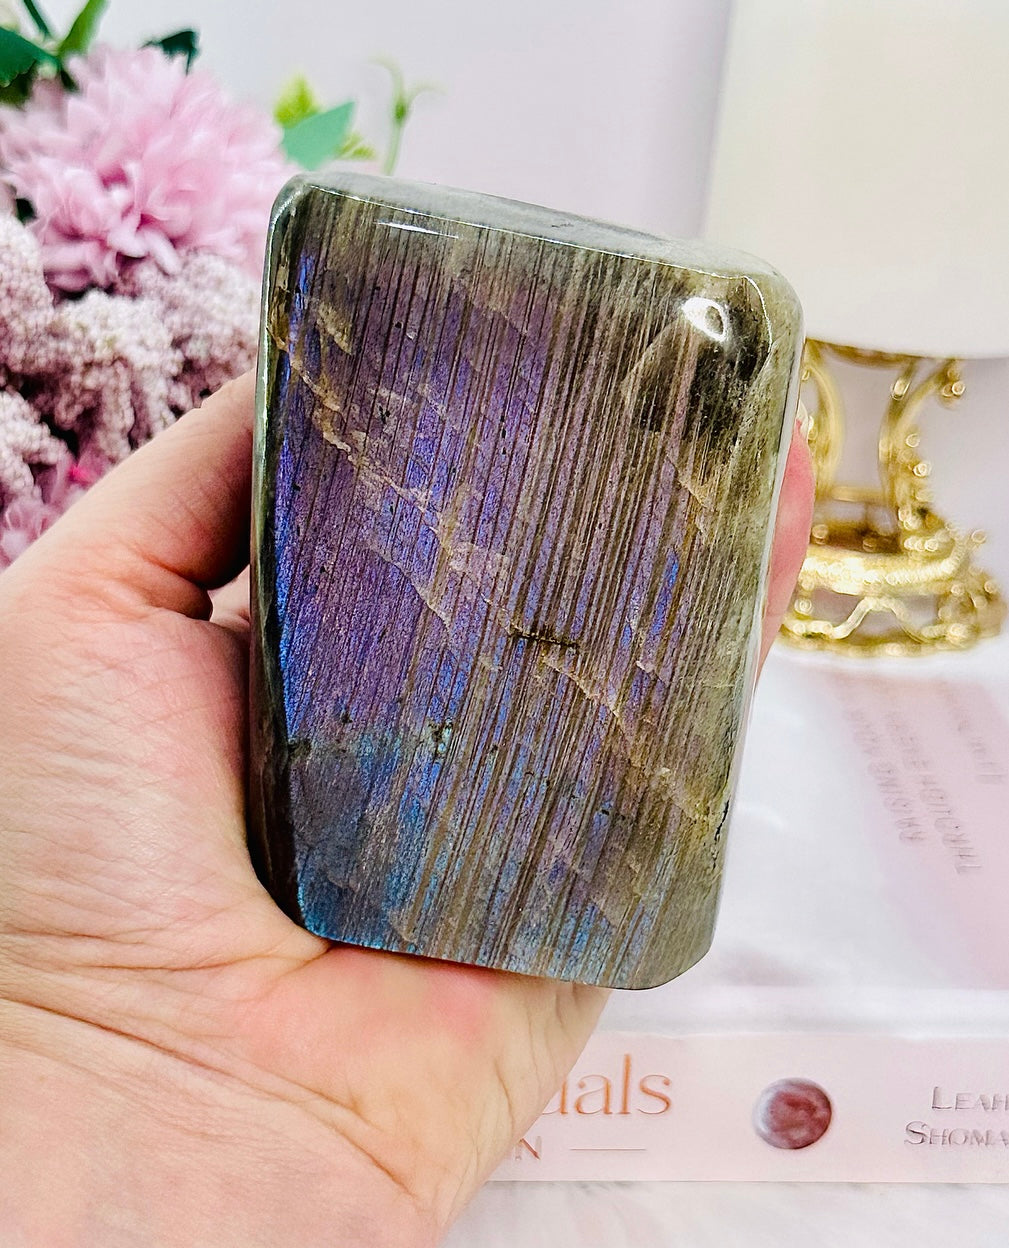 Absolutely Divine Large 488gram Labradorite Freeform With Stunning Pink, Purple & Blue Flash Just Amazing